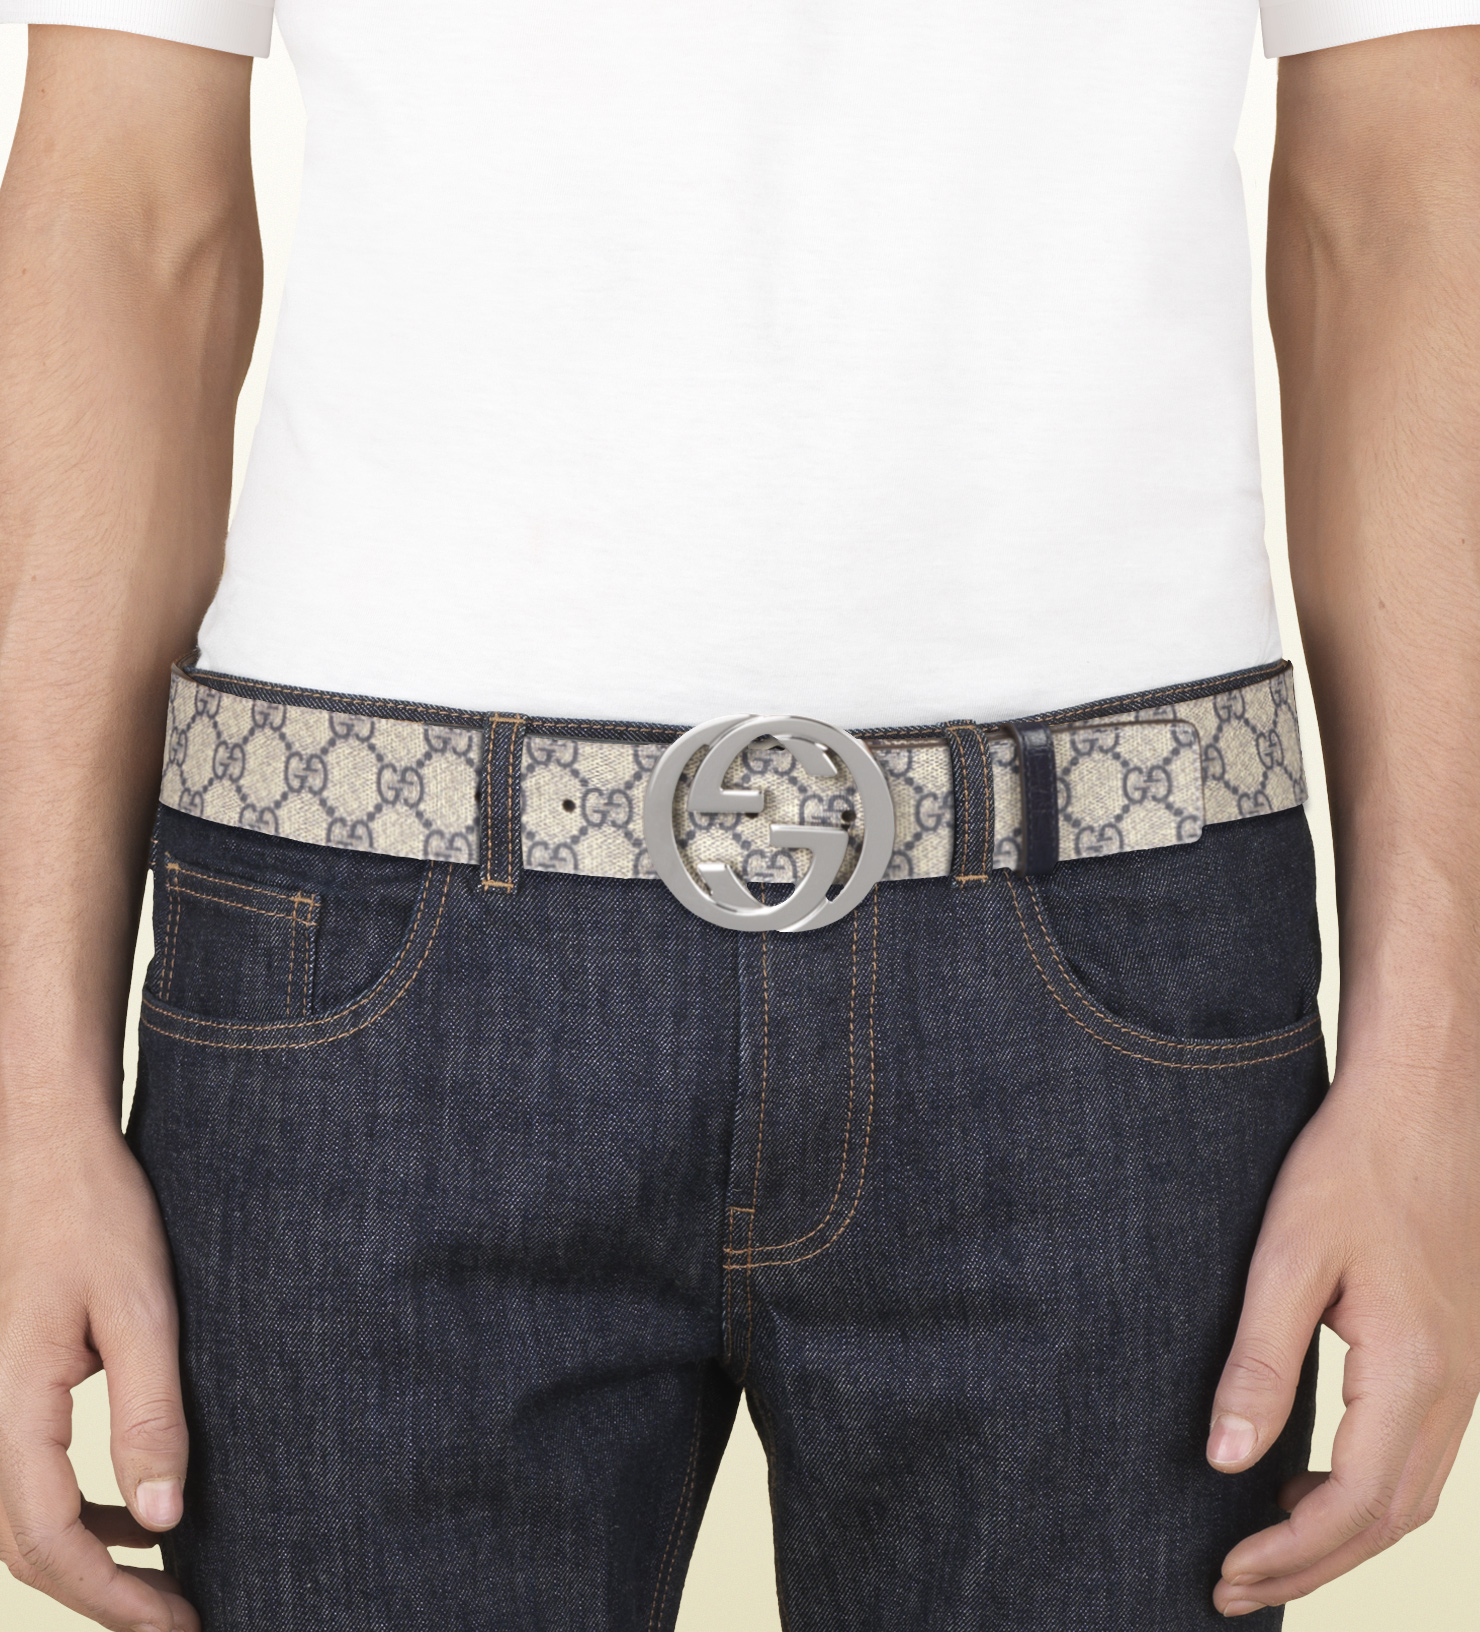 Gucci Gg Plus Belt With Interlocking G Buckle in Beige (Gray) for Men - Lyst